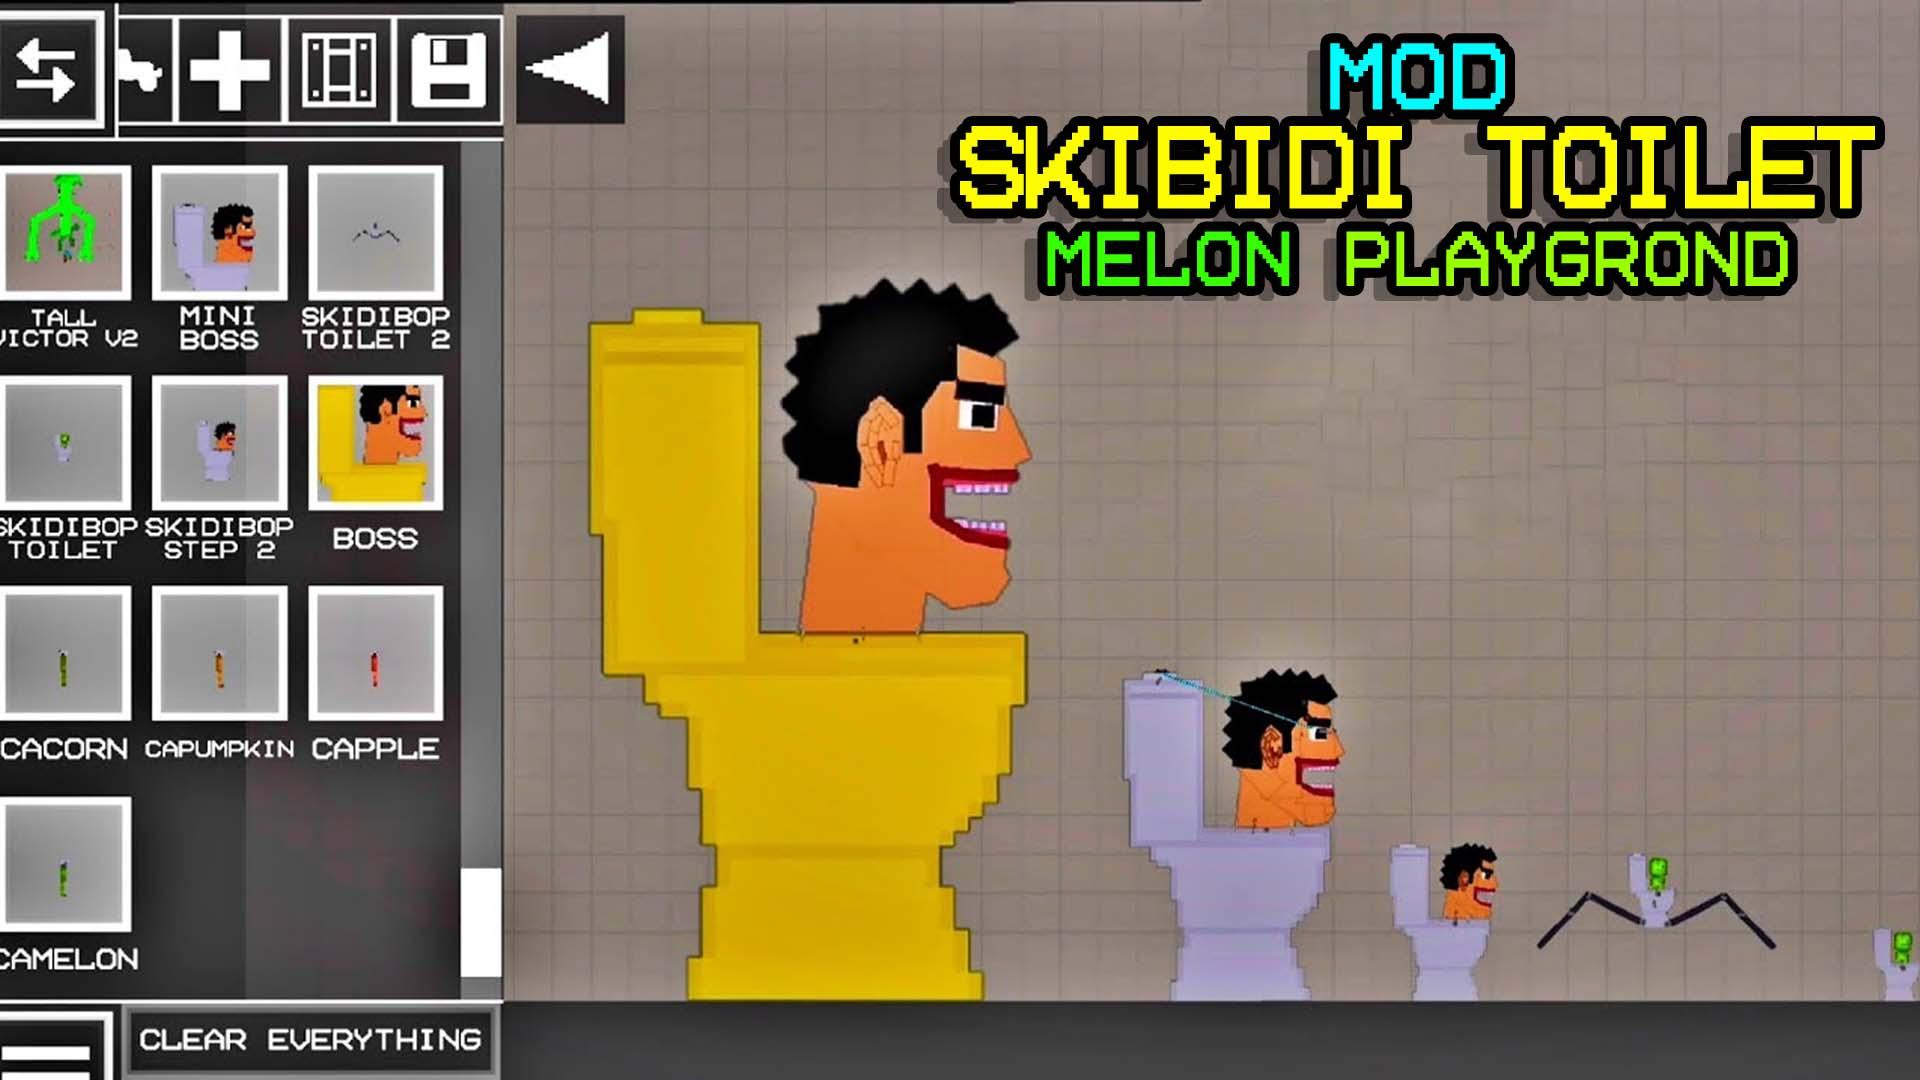 Мод melon playground skibidi toilets. Mod Melon Playground SKIBIDI Toilet. Мелон санбокс фото игры. Игрушка Мелон мод. Скибиди туалет в Мелон плейграунд.